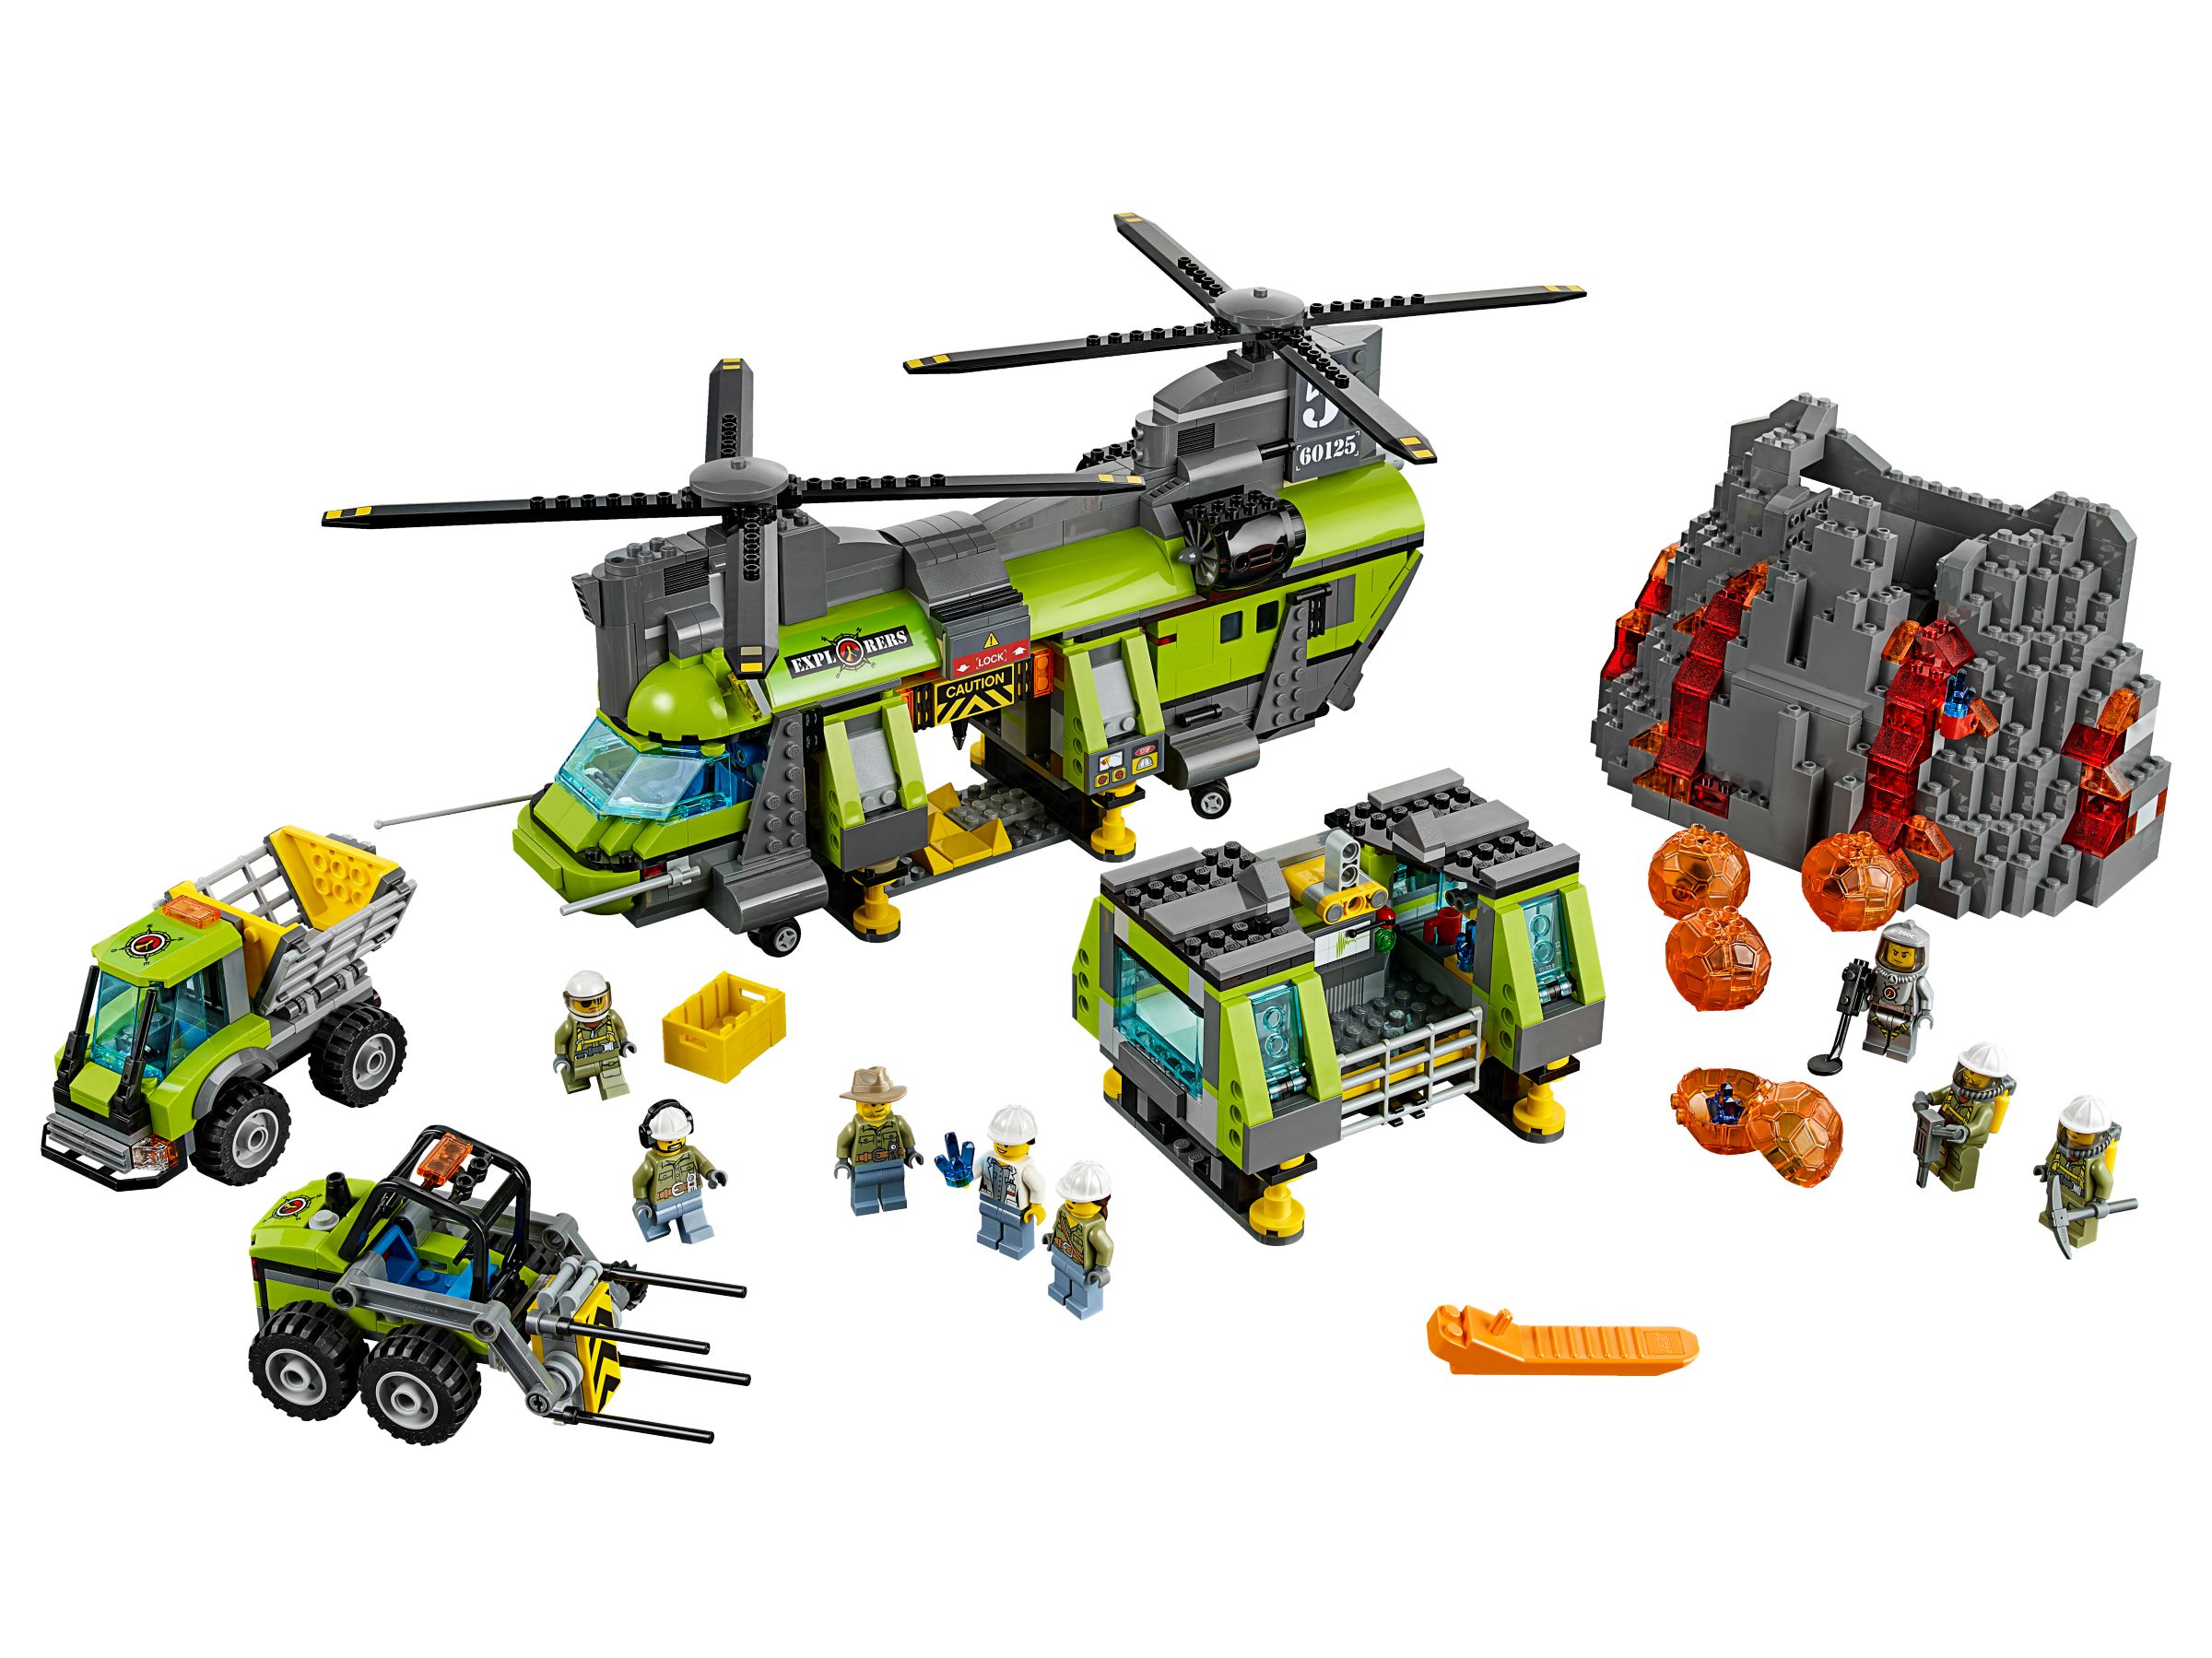 LEGO City 60125 Vulkan-Schwerlasthelikopter